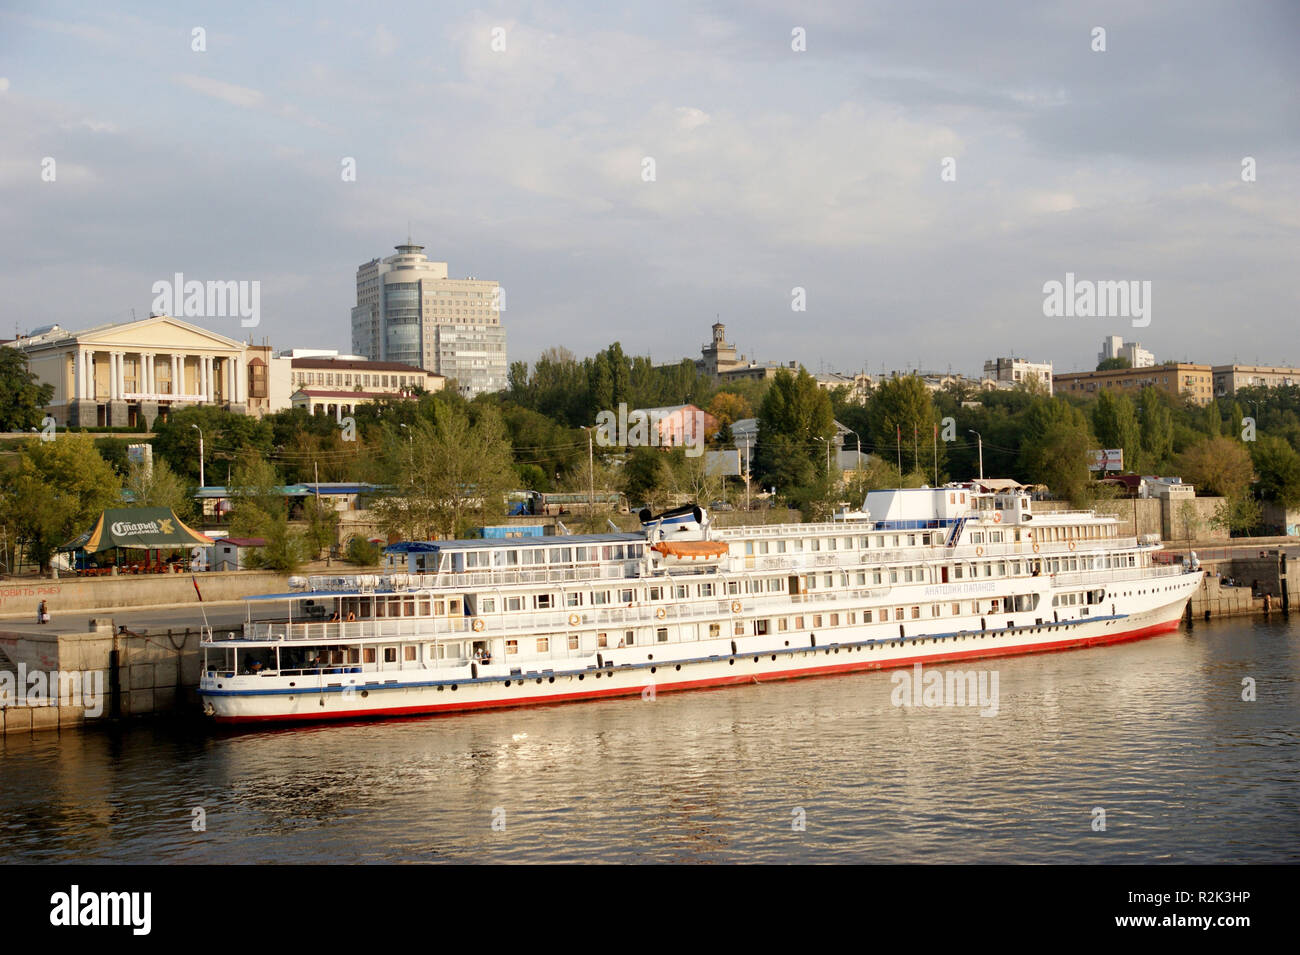 Russia, Volgograd, passenger liner, the Volga, landing stage, town view, Stock Photo